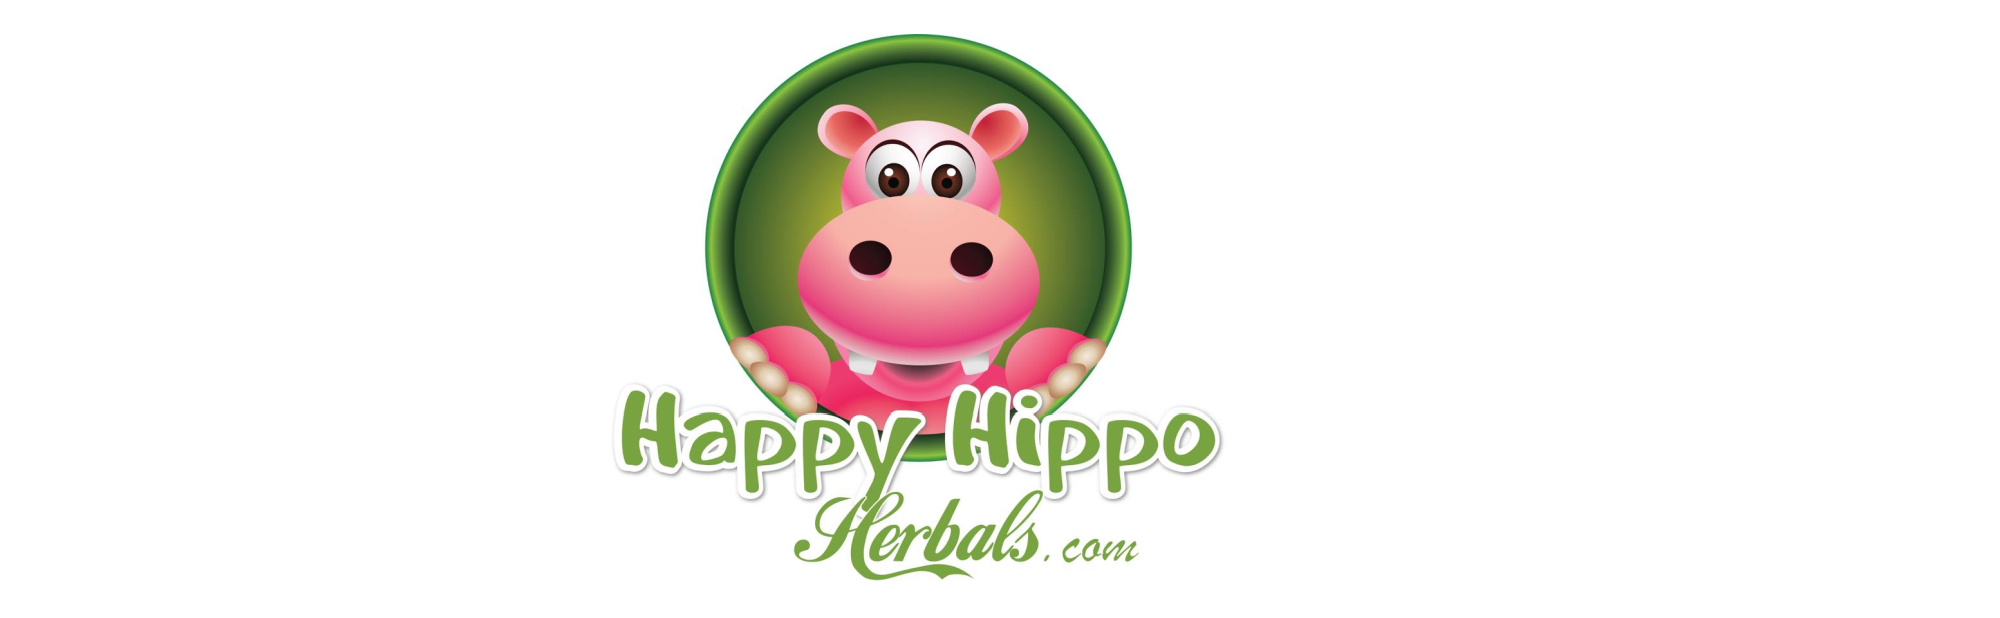 image of happy hippo herbals